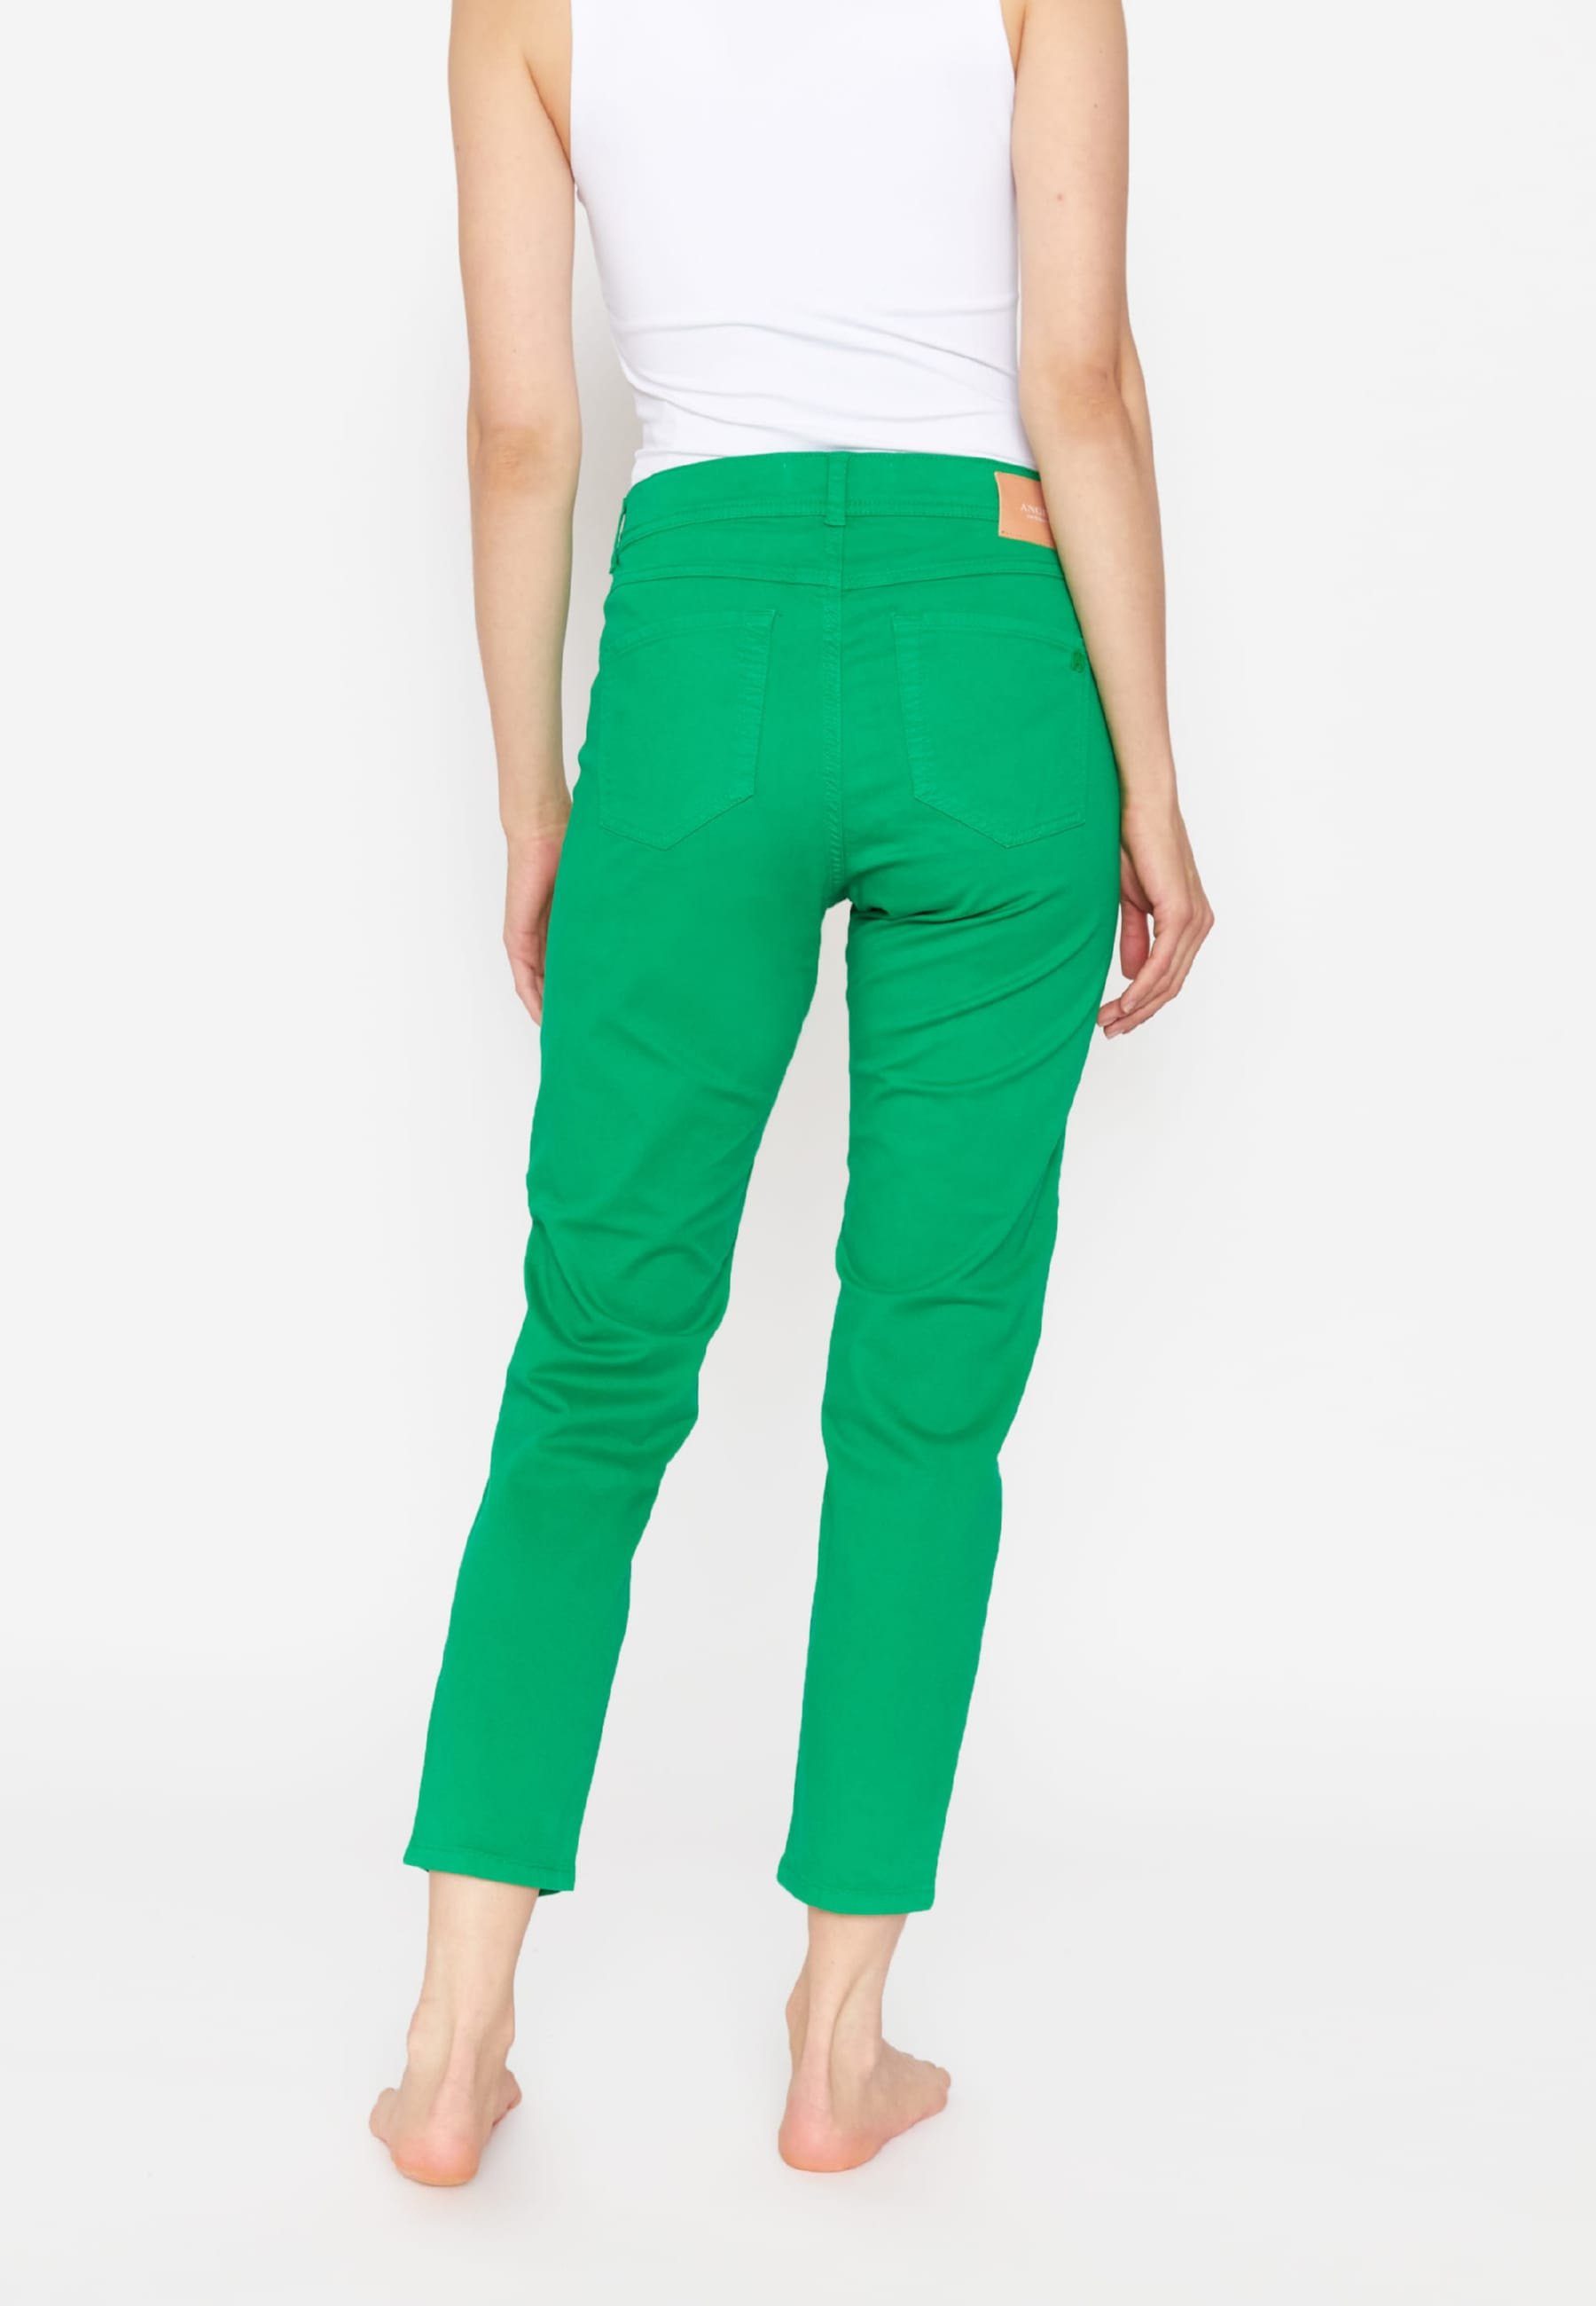 ANGELS 7/8-Jeans Coloured Jeans Ornella Label-Applikationen grün mit